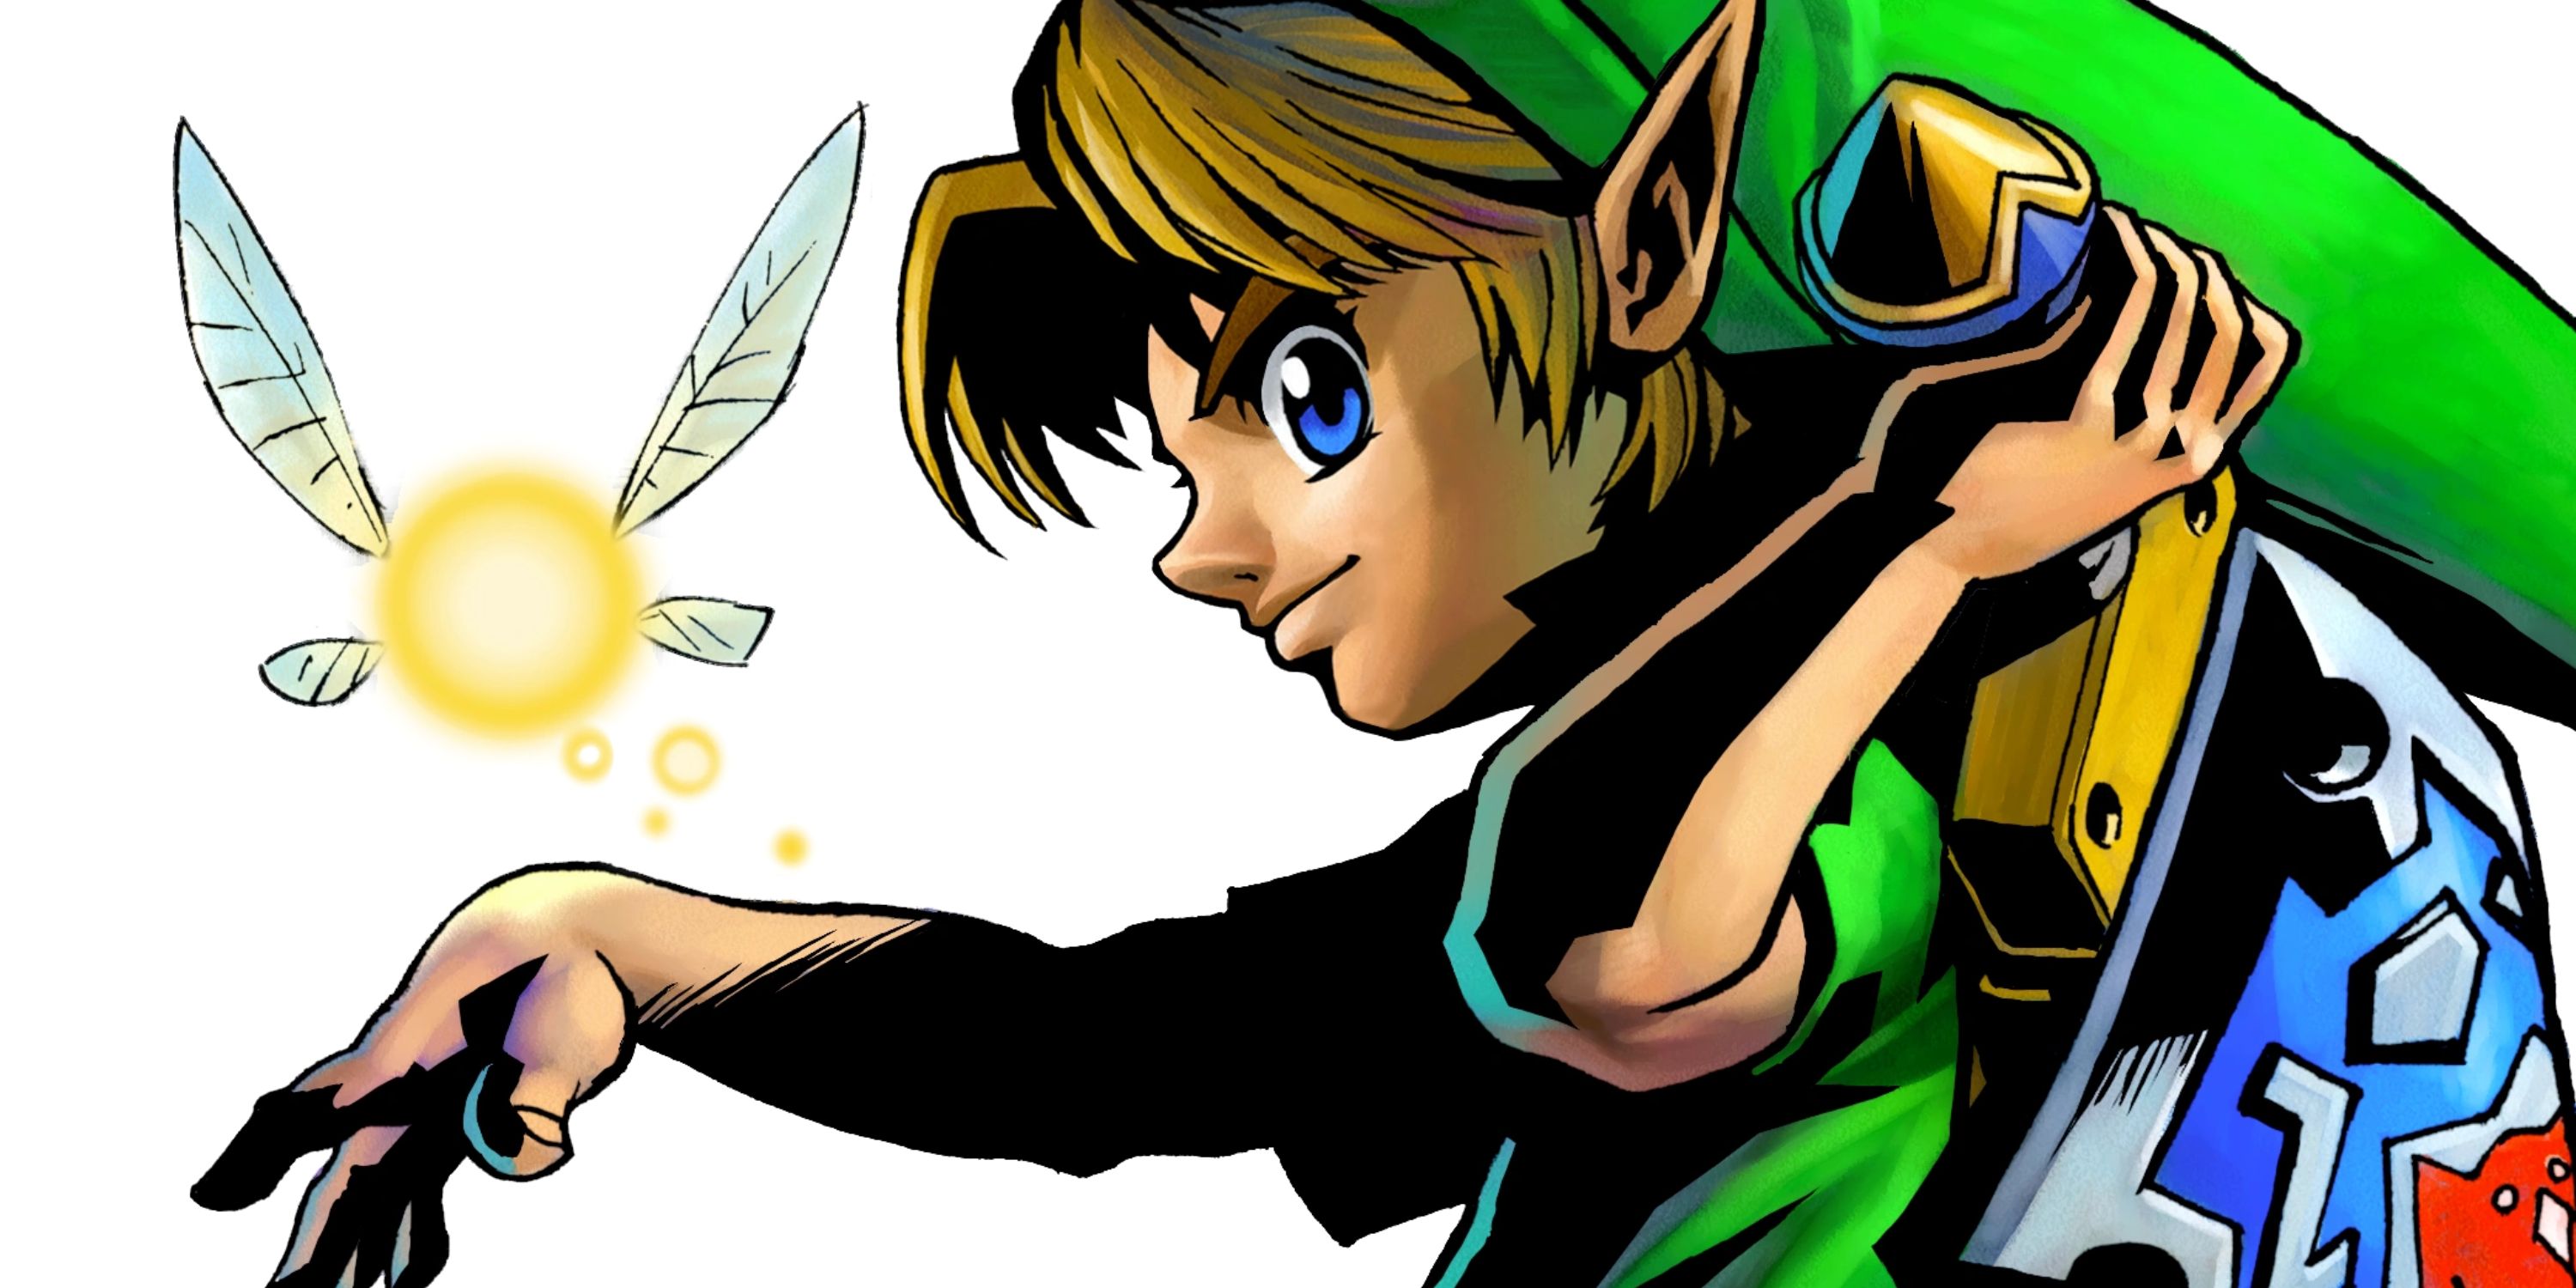 Link with fairy companion Tatl